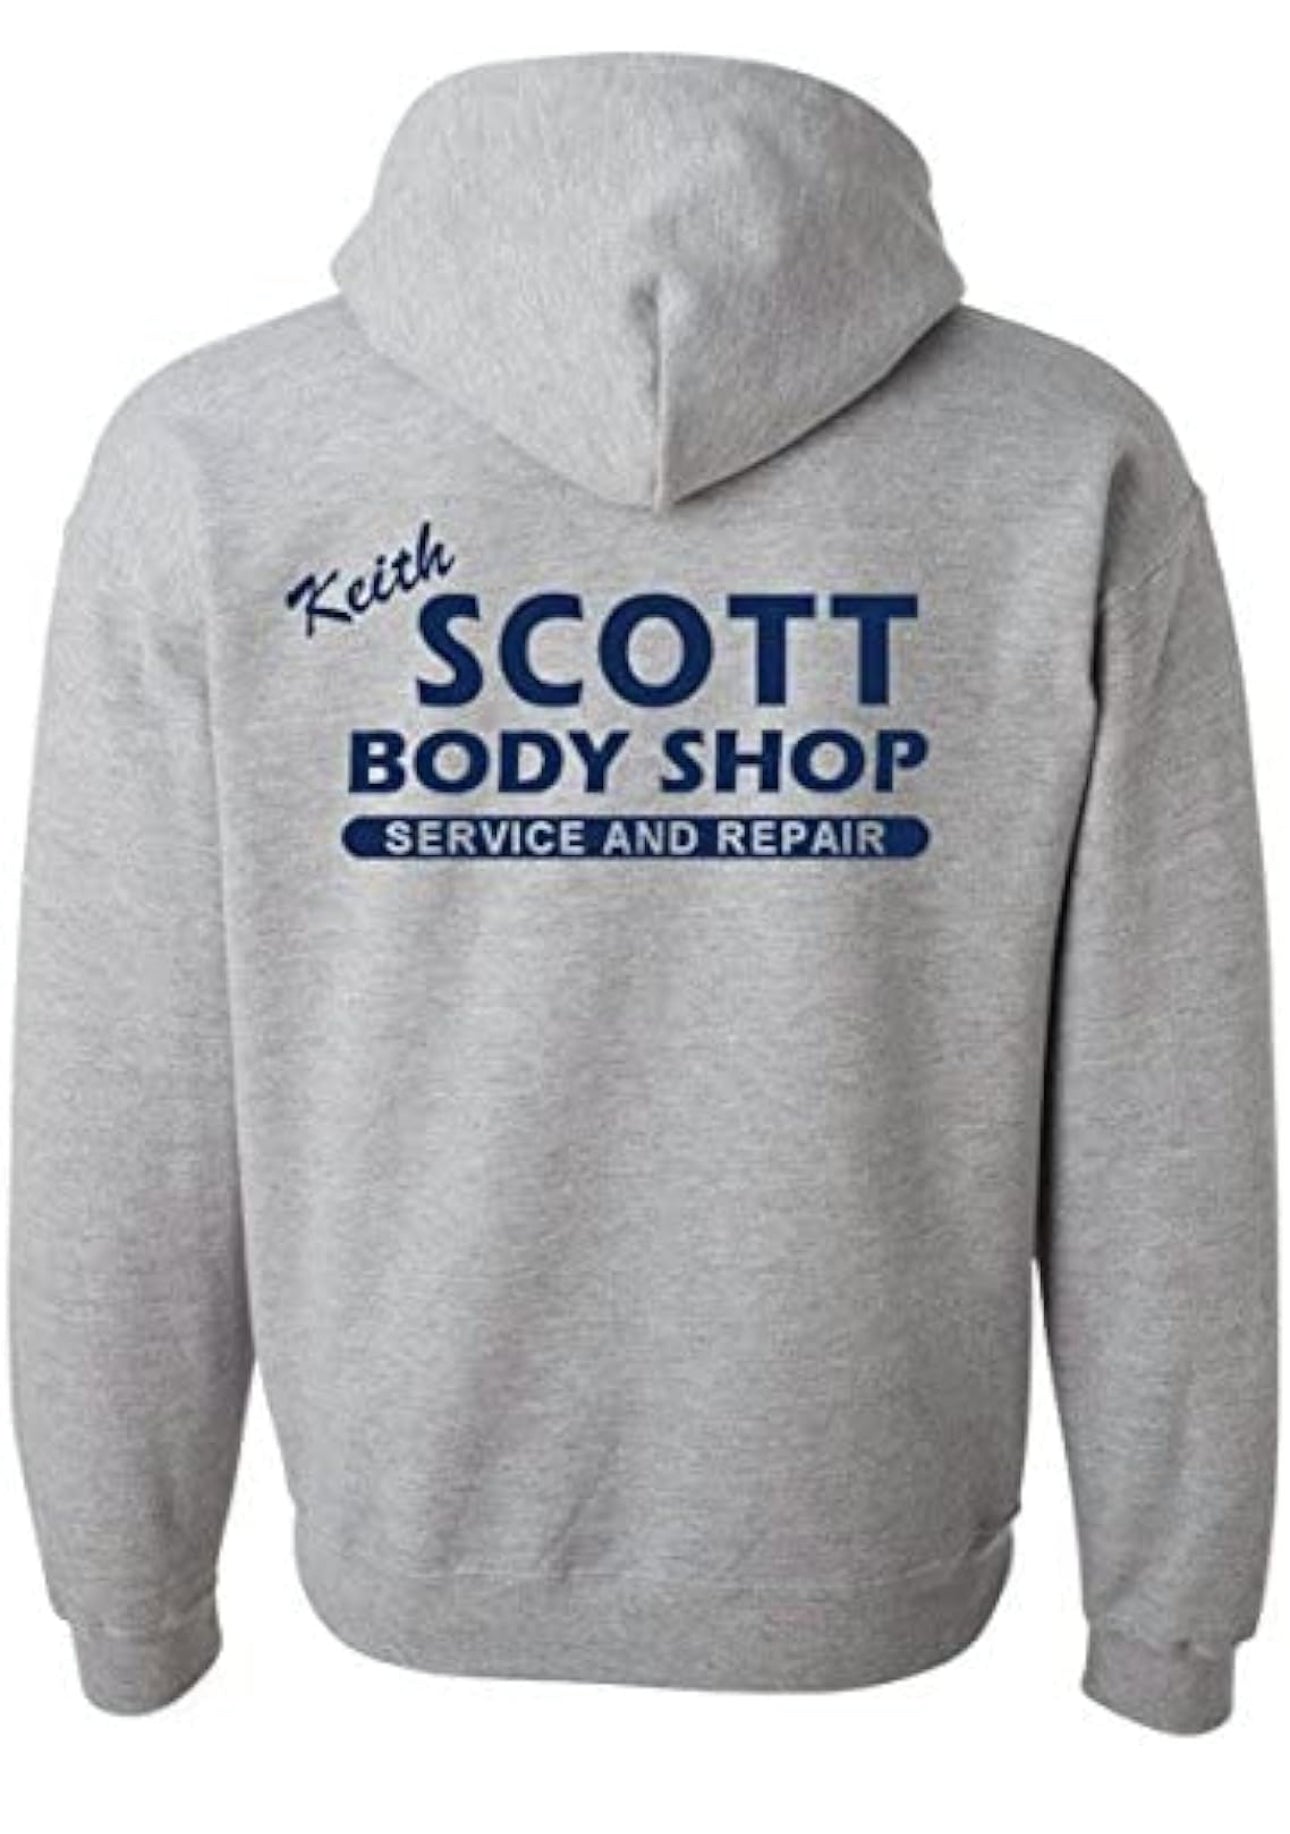 Scotts Body Shop